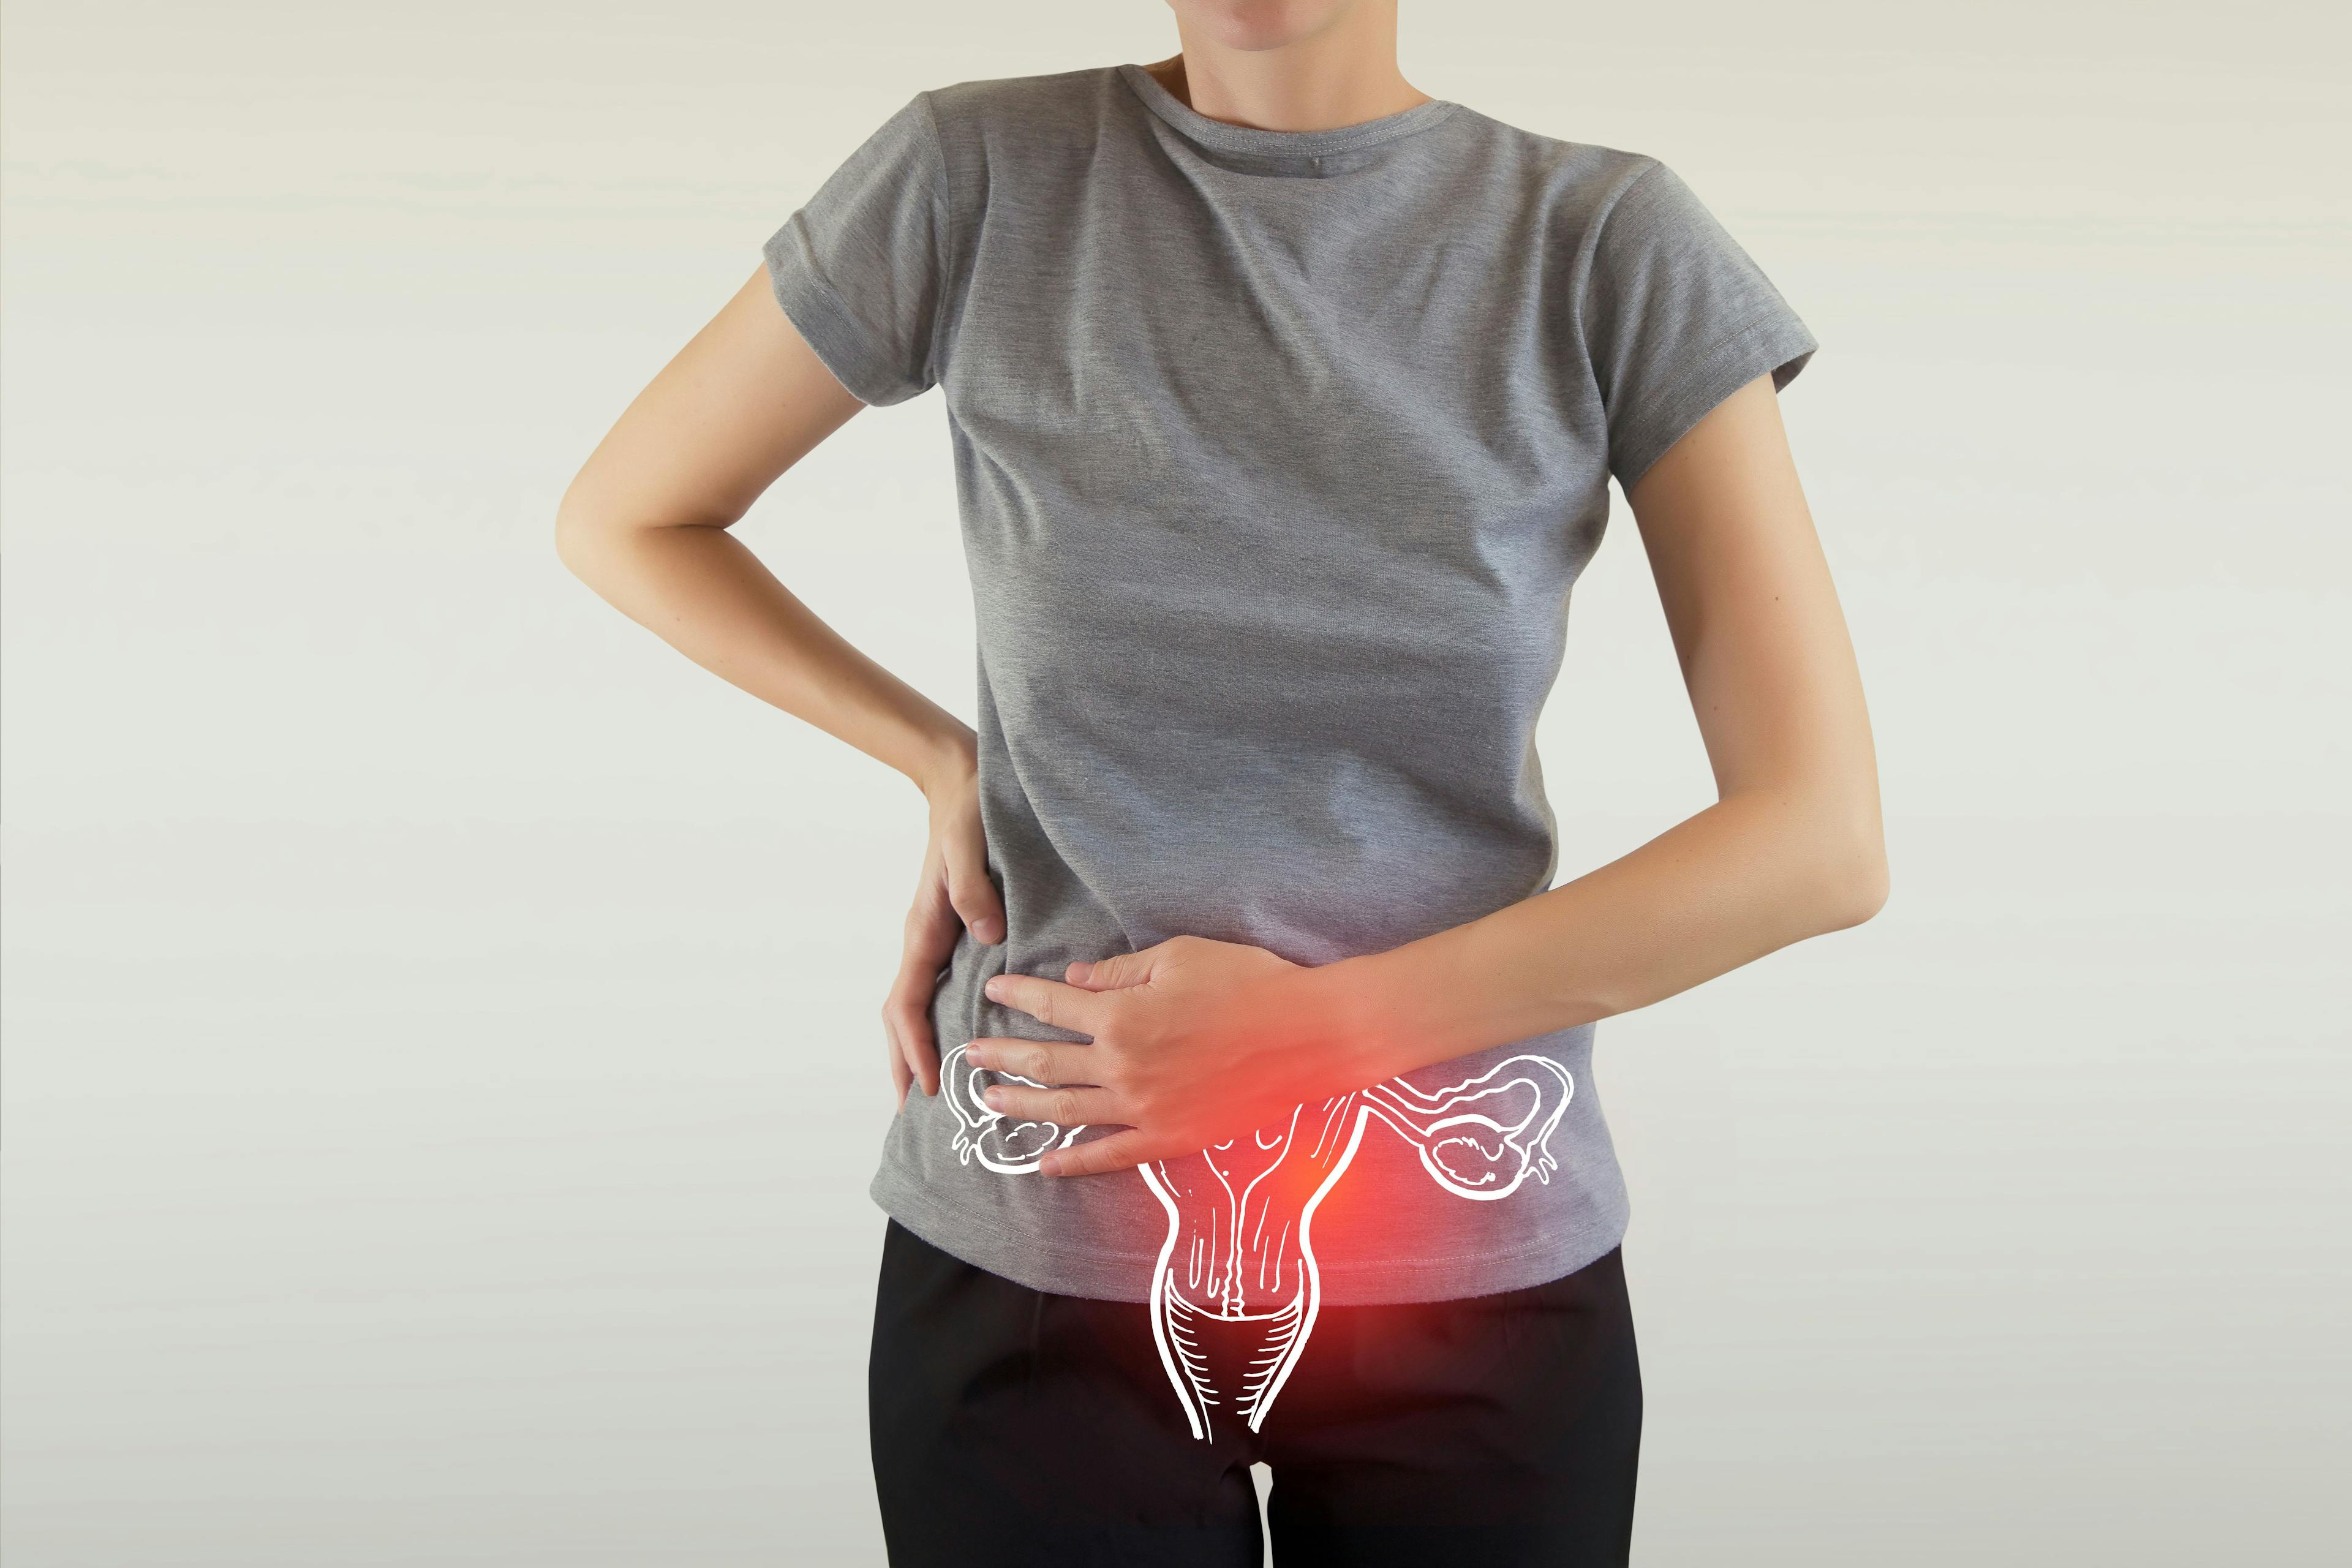 Radical hysterectomy improves survivability from cervical cancer | Image Credit: © mi_viri - © mi_viri - stock.adobe.com.